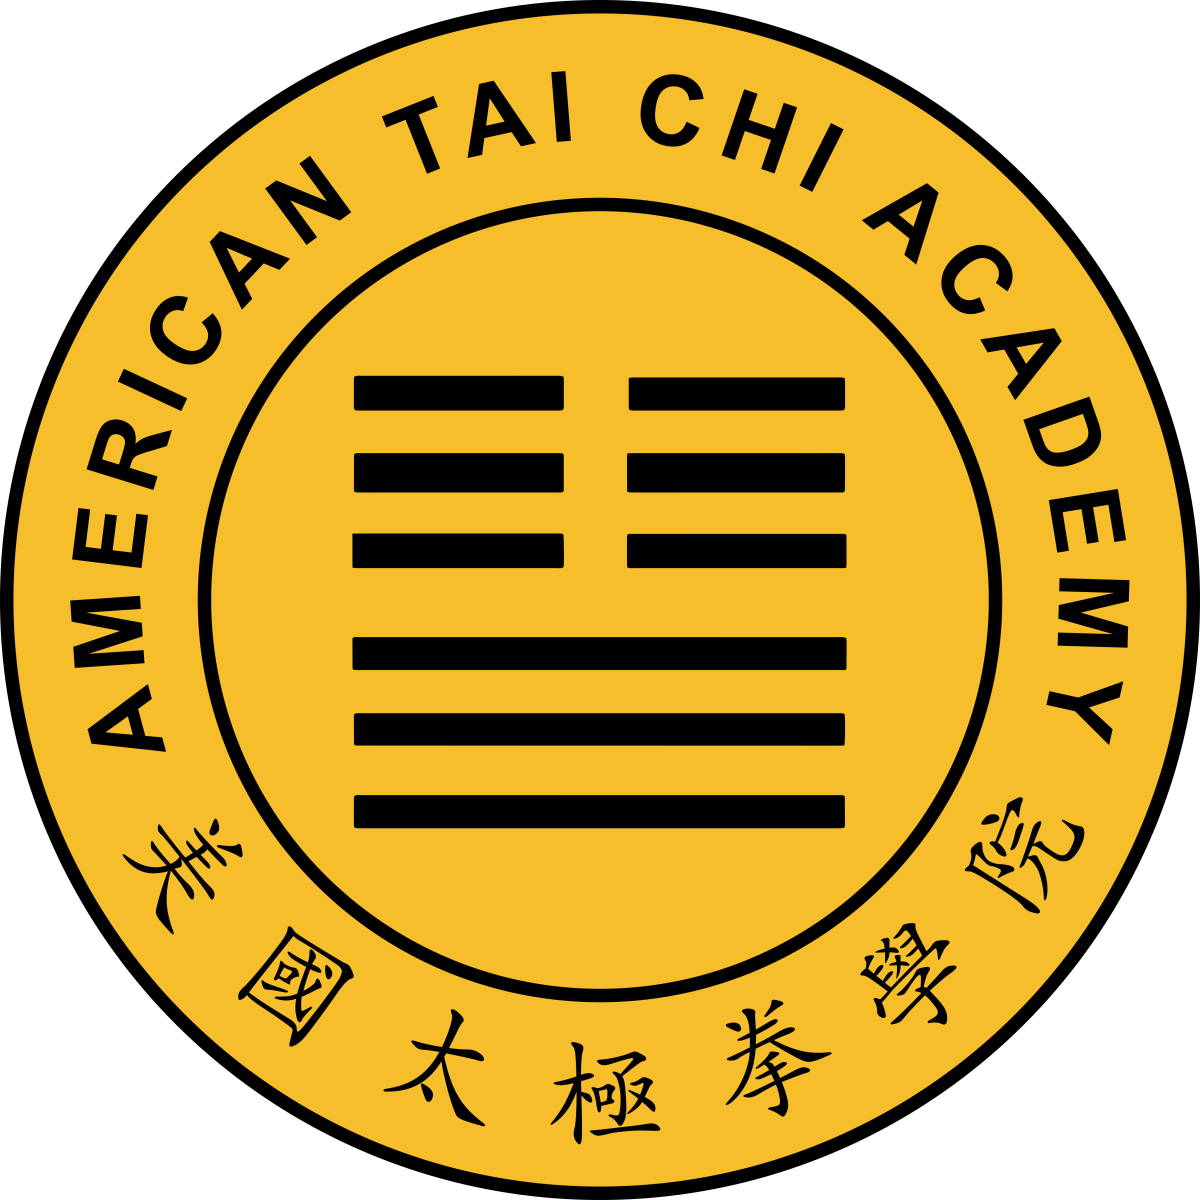 The American Tai Chi Academy